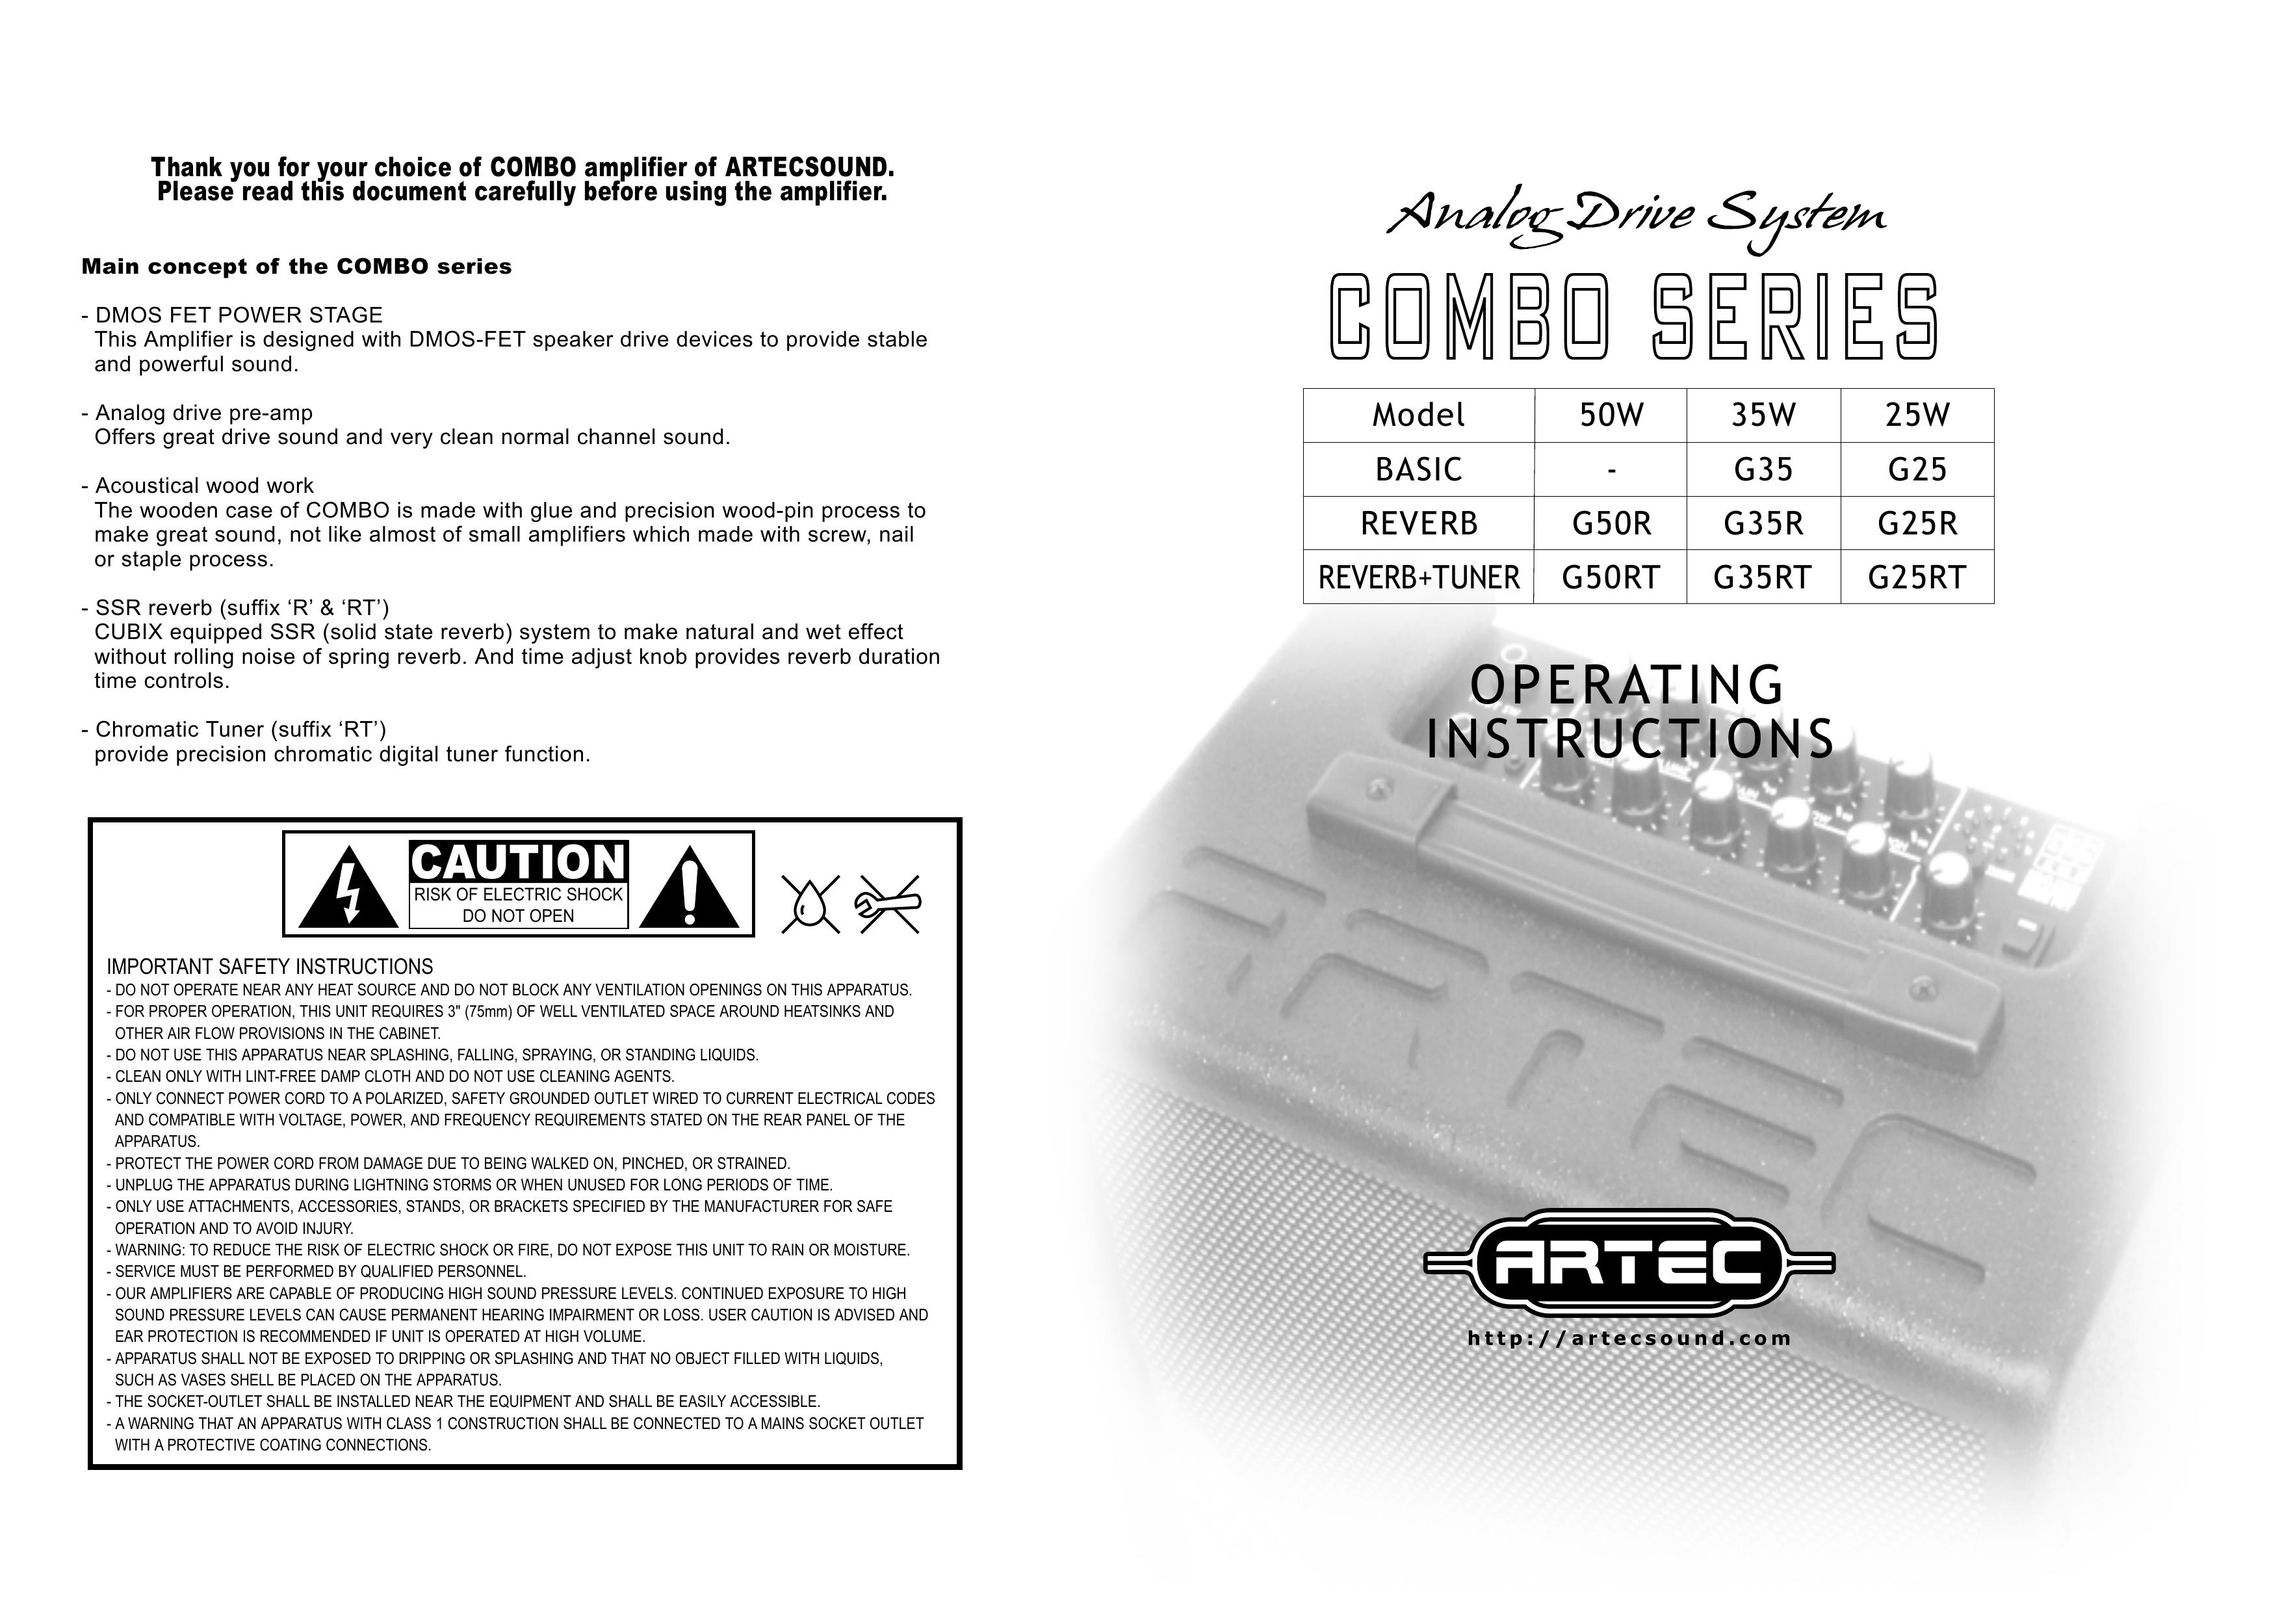 Artech USA 50W Range User Manual